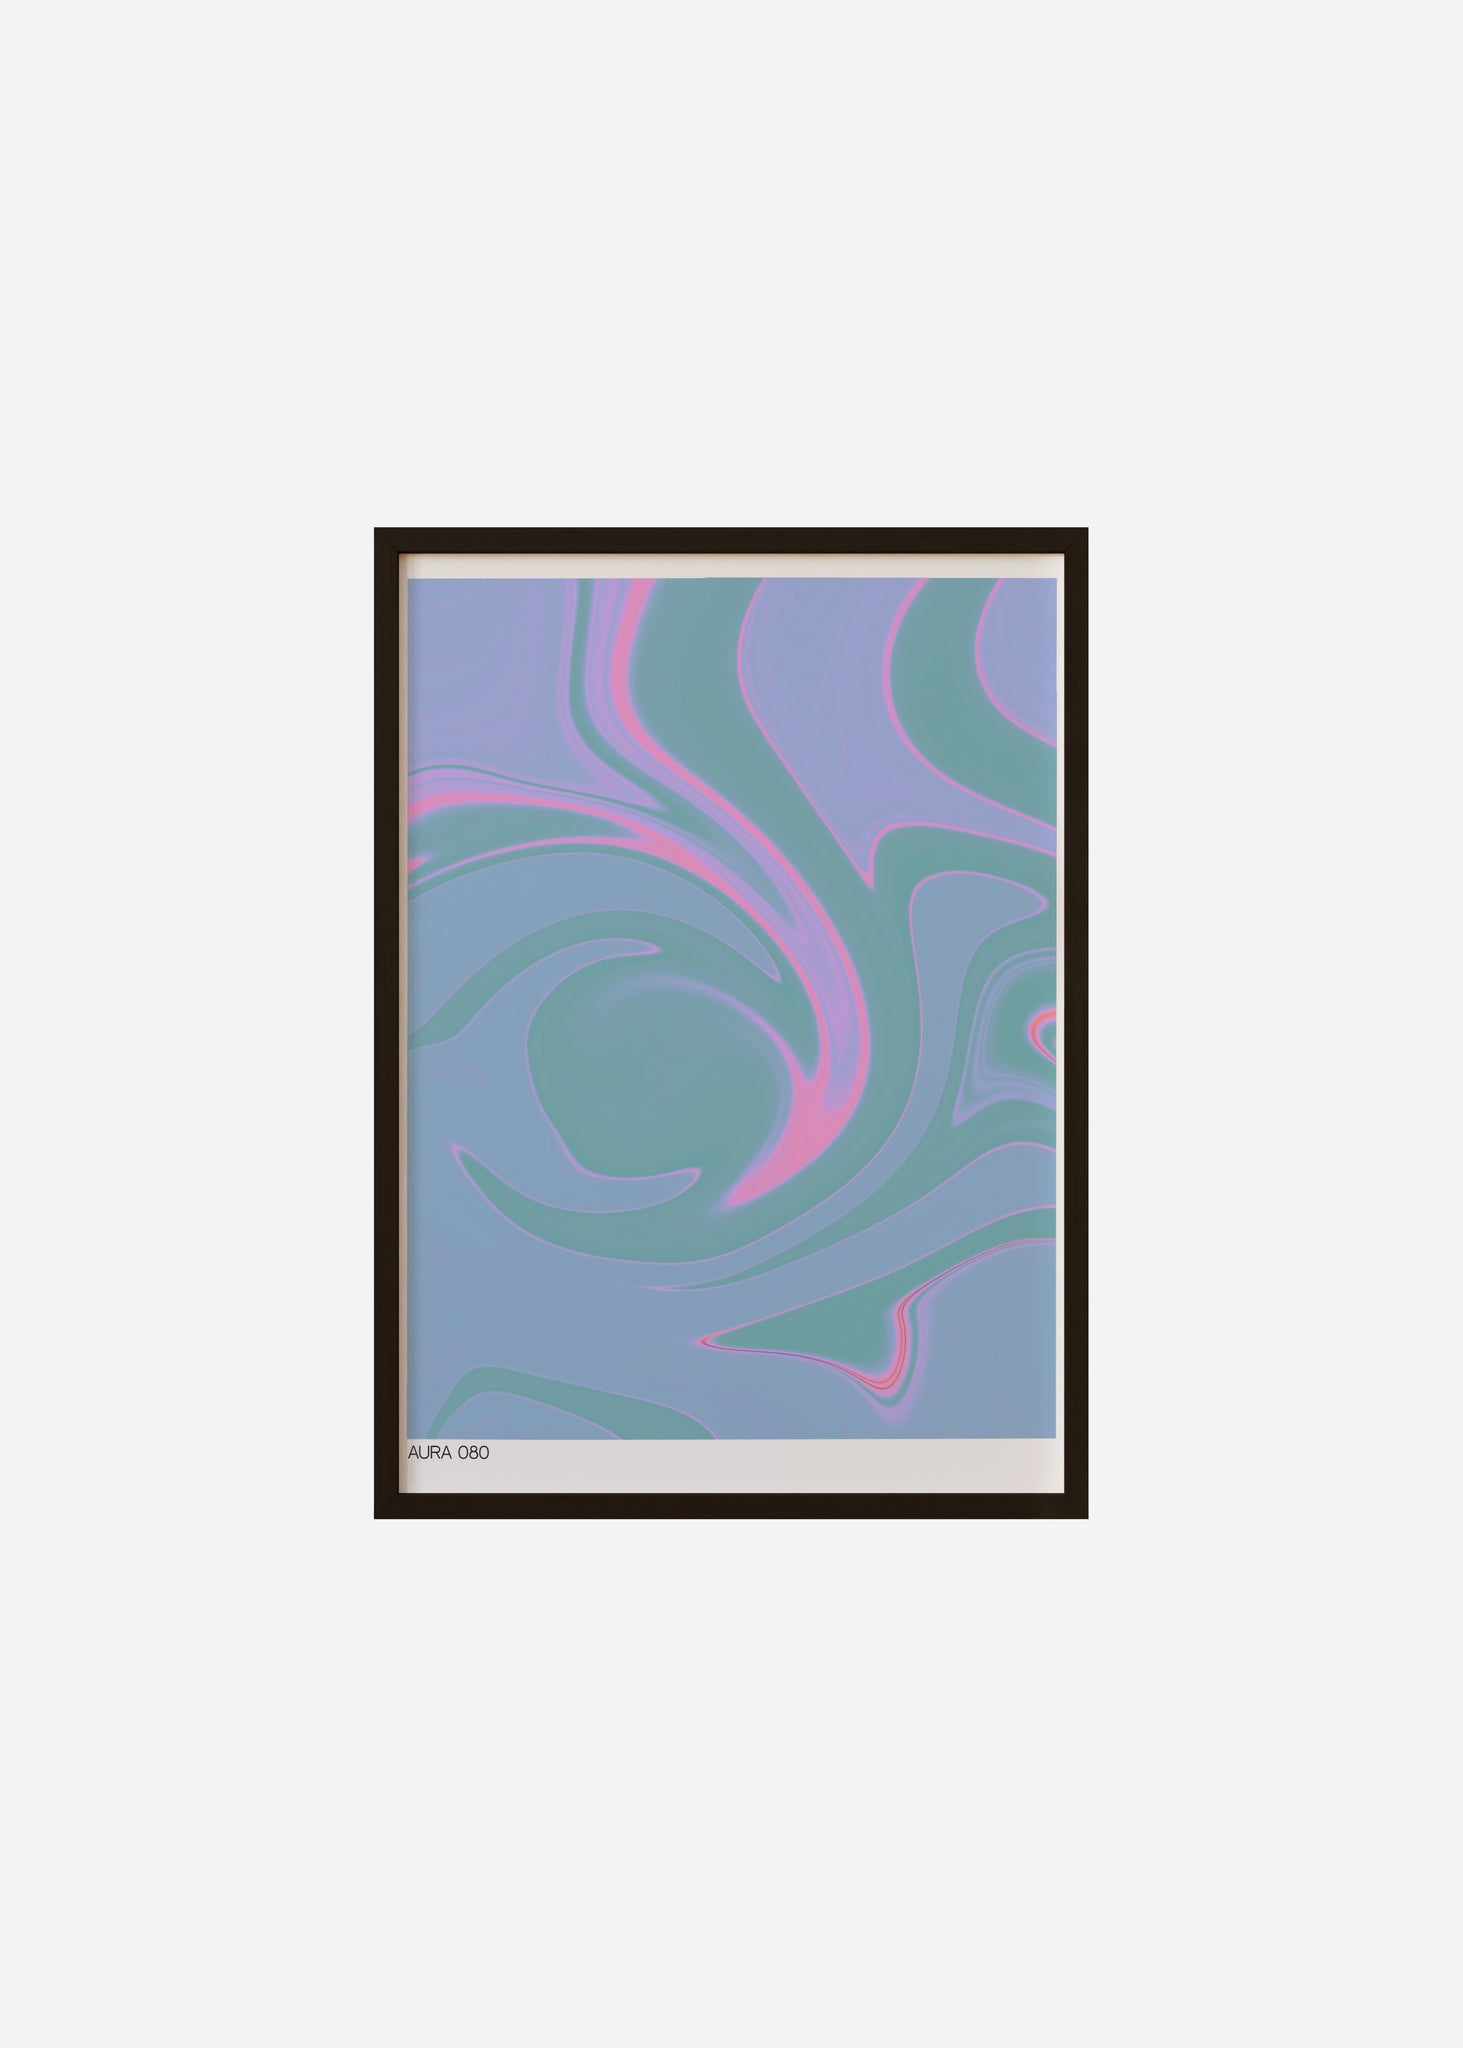 aura 080 Framed Print